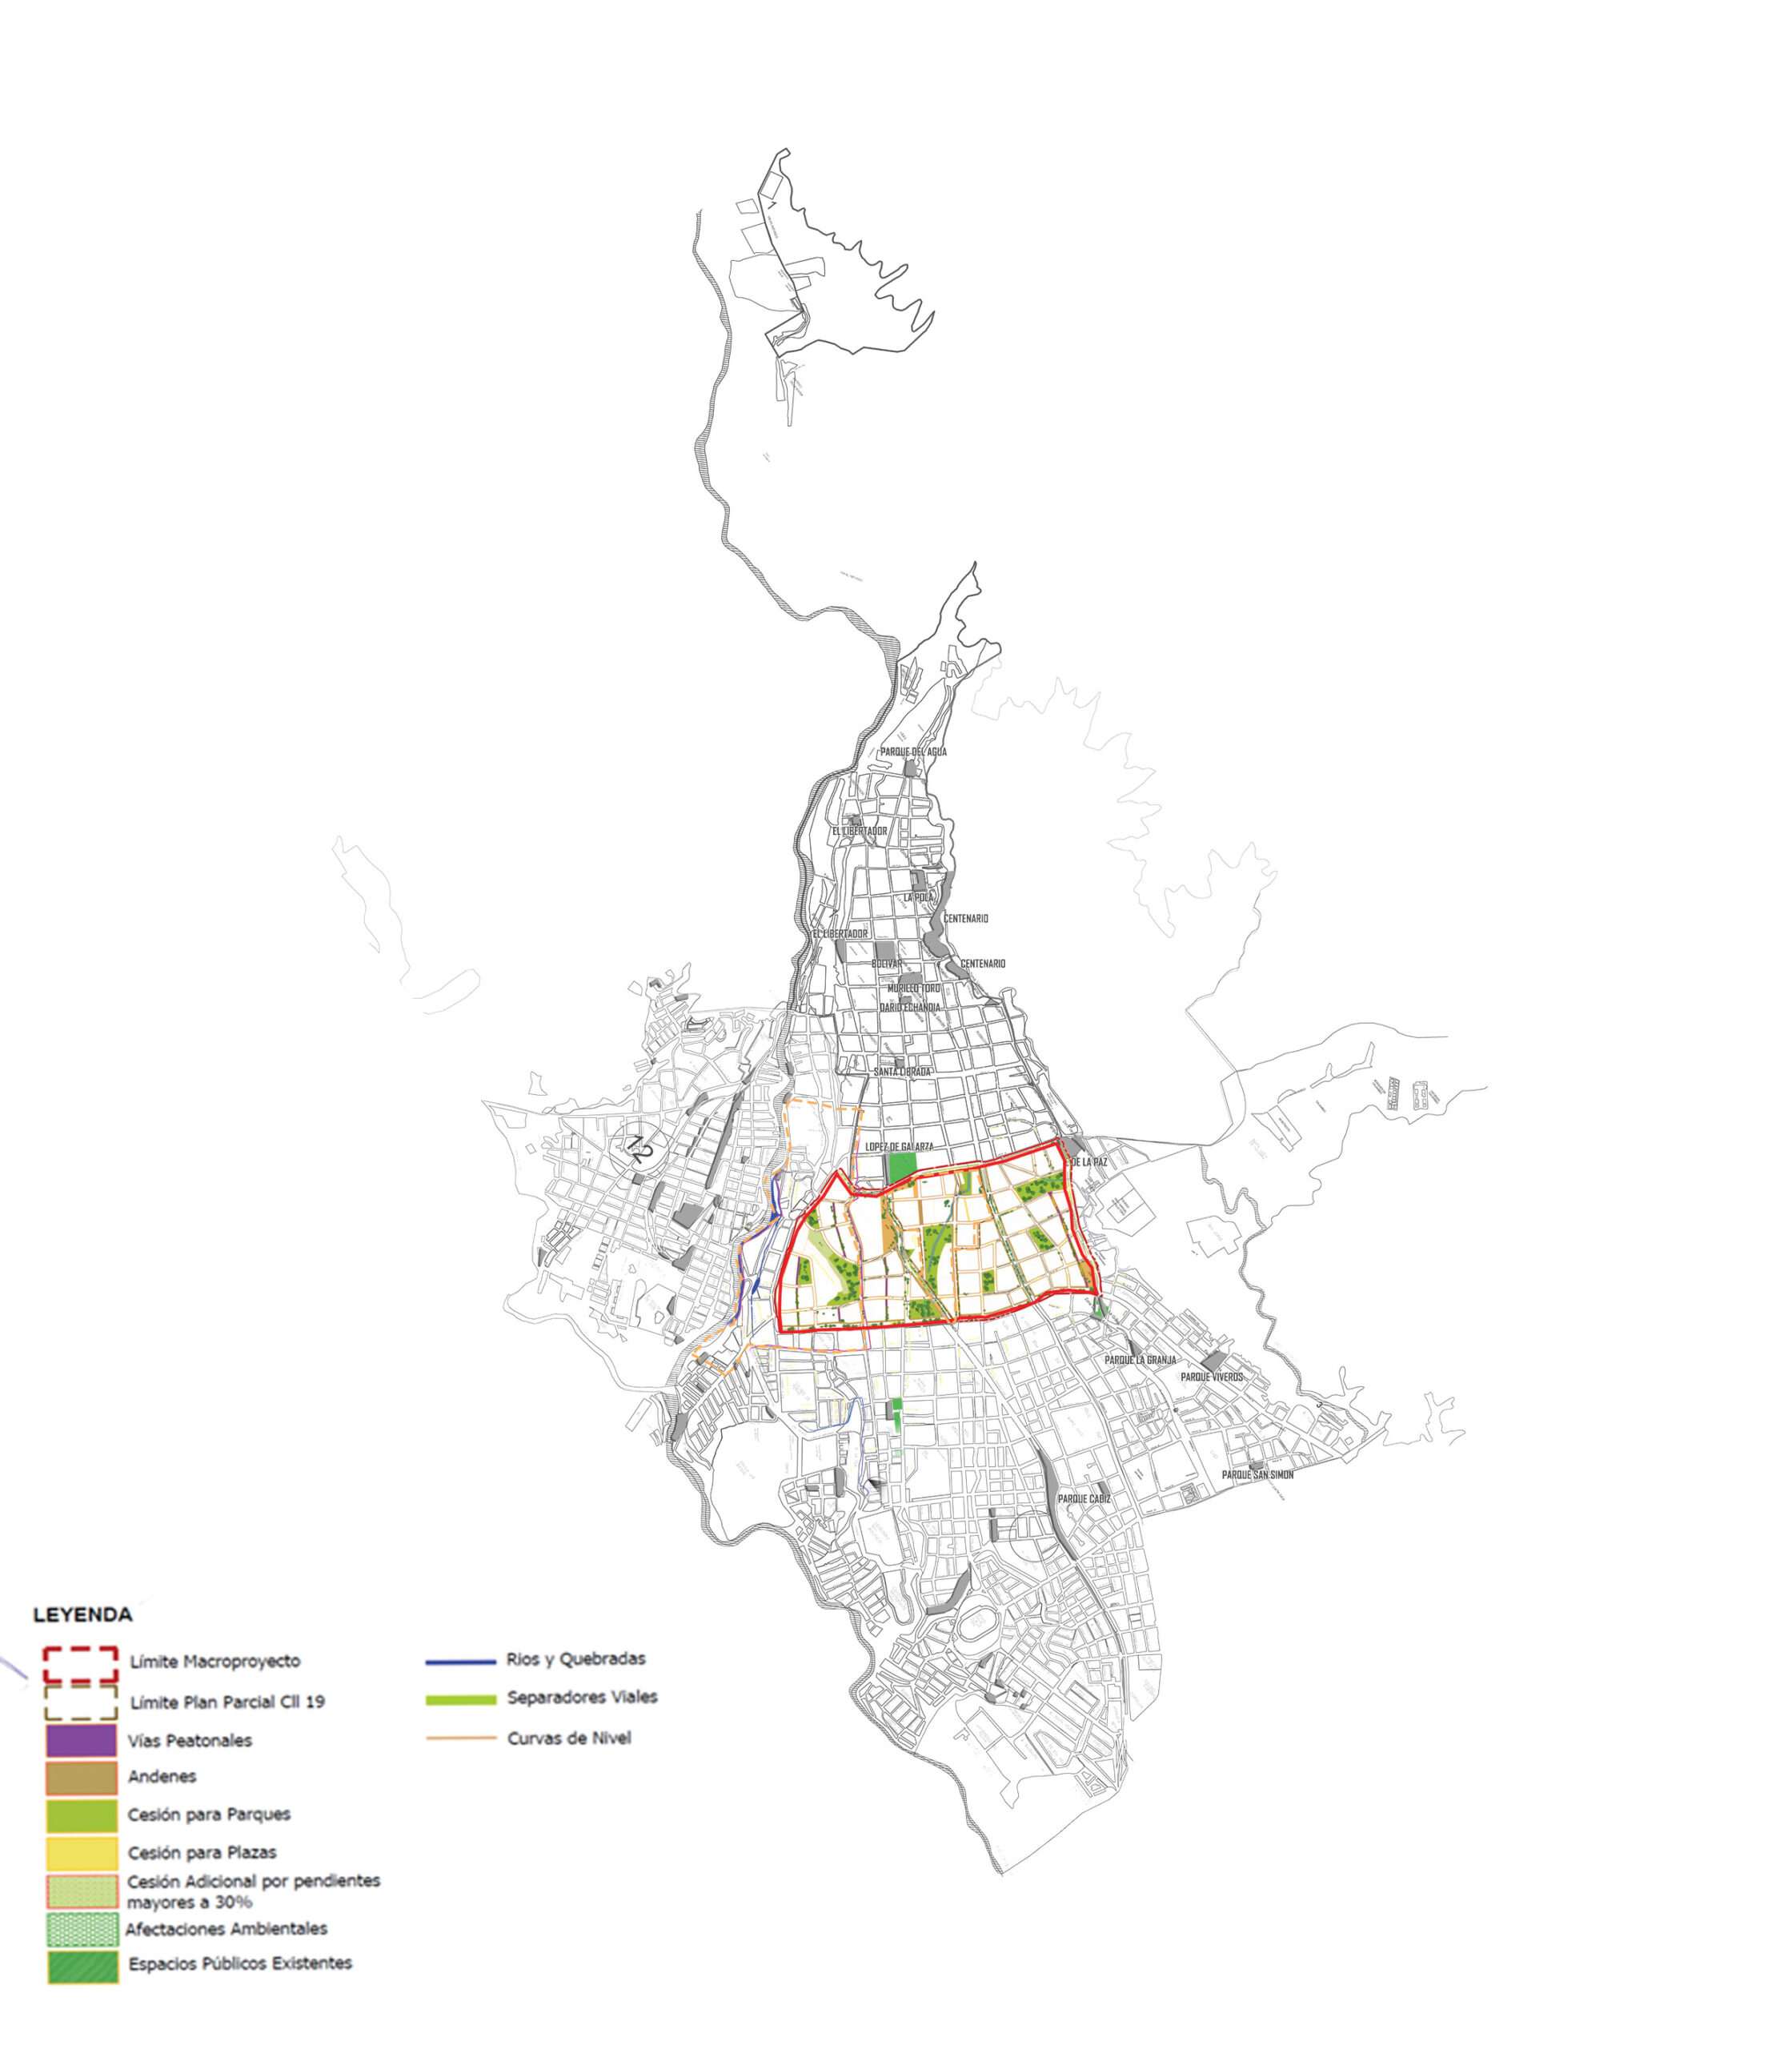 localizacion of the urban renewal area - green areas